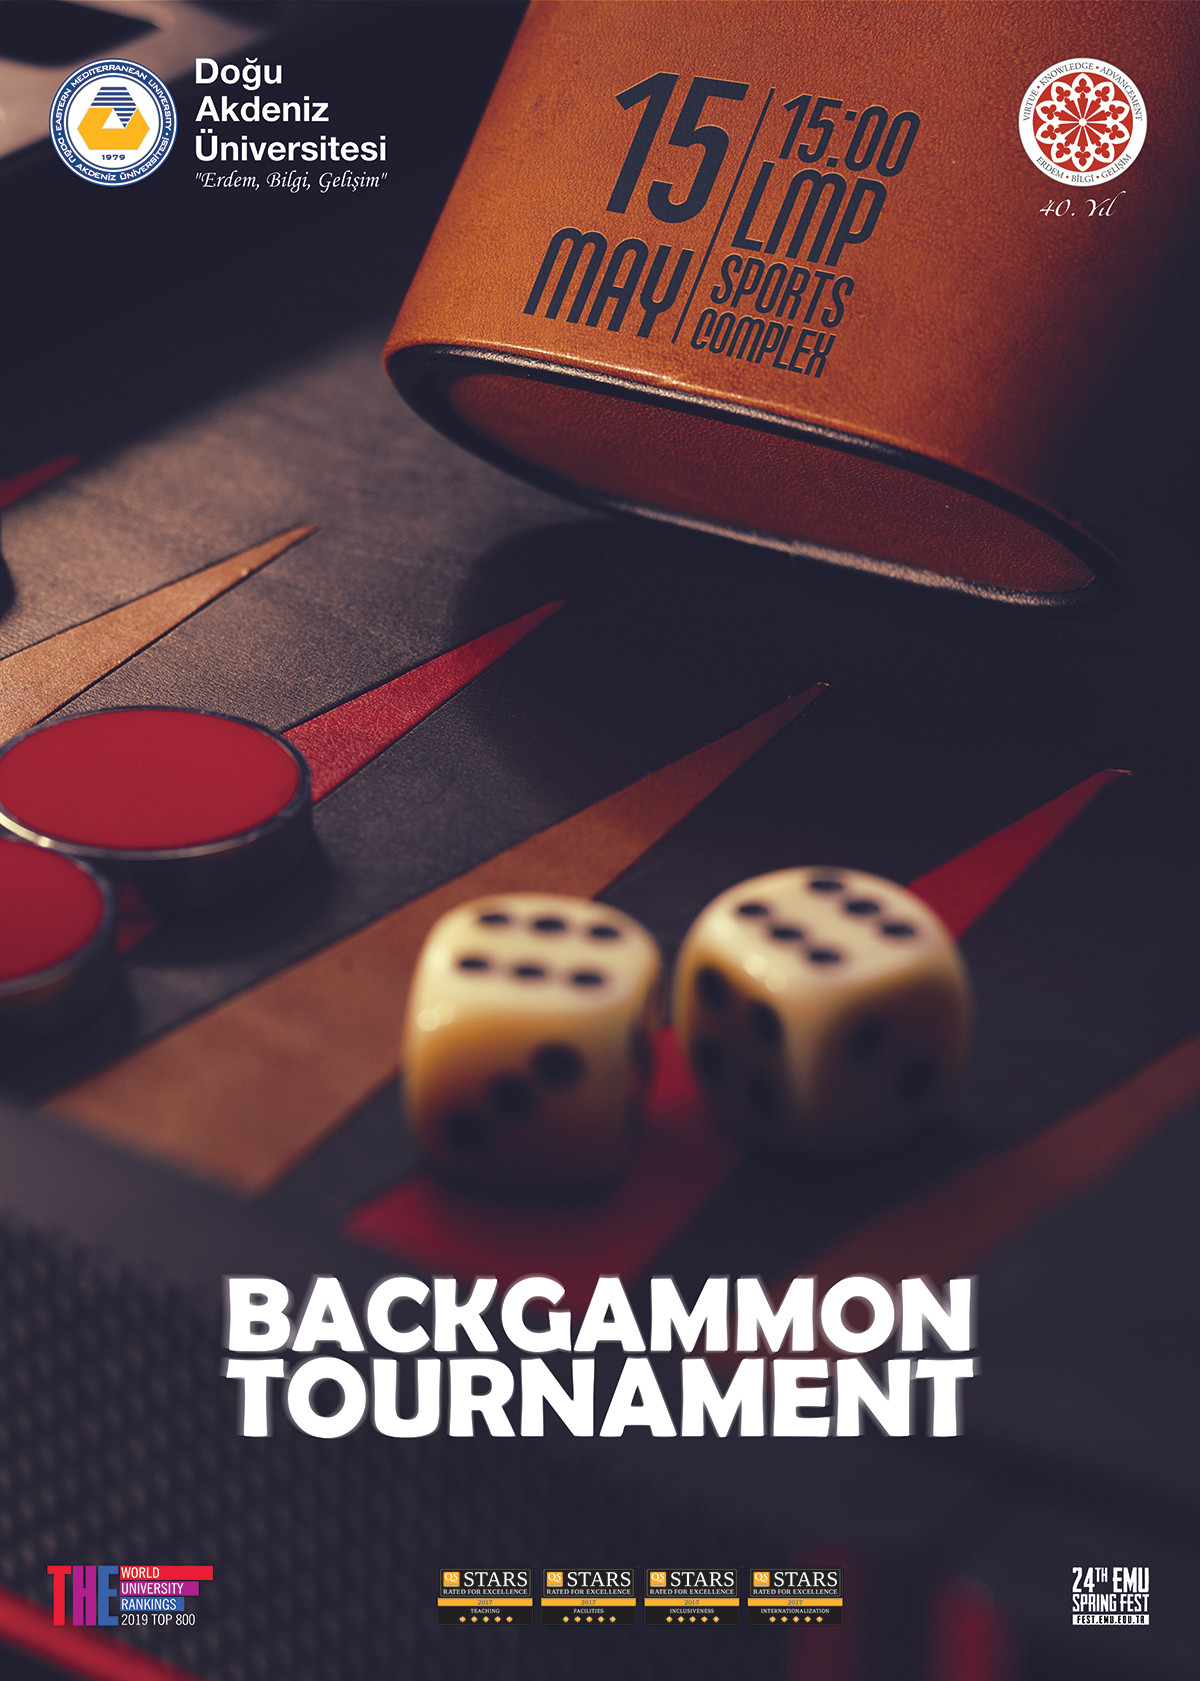 Backgammon Tournament Events Eastern Mediterranean University (EMU